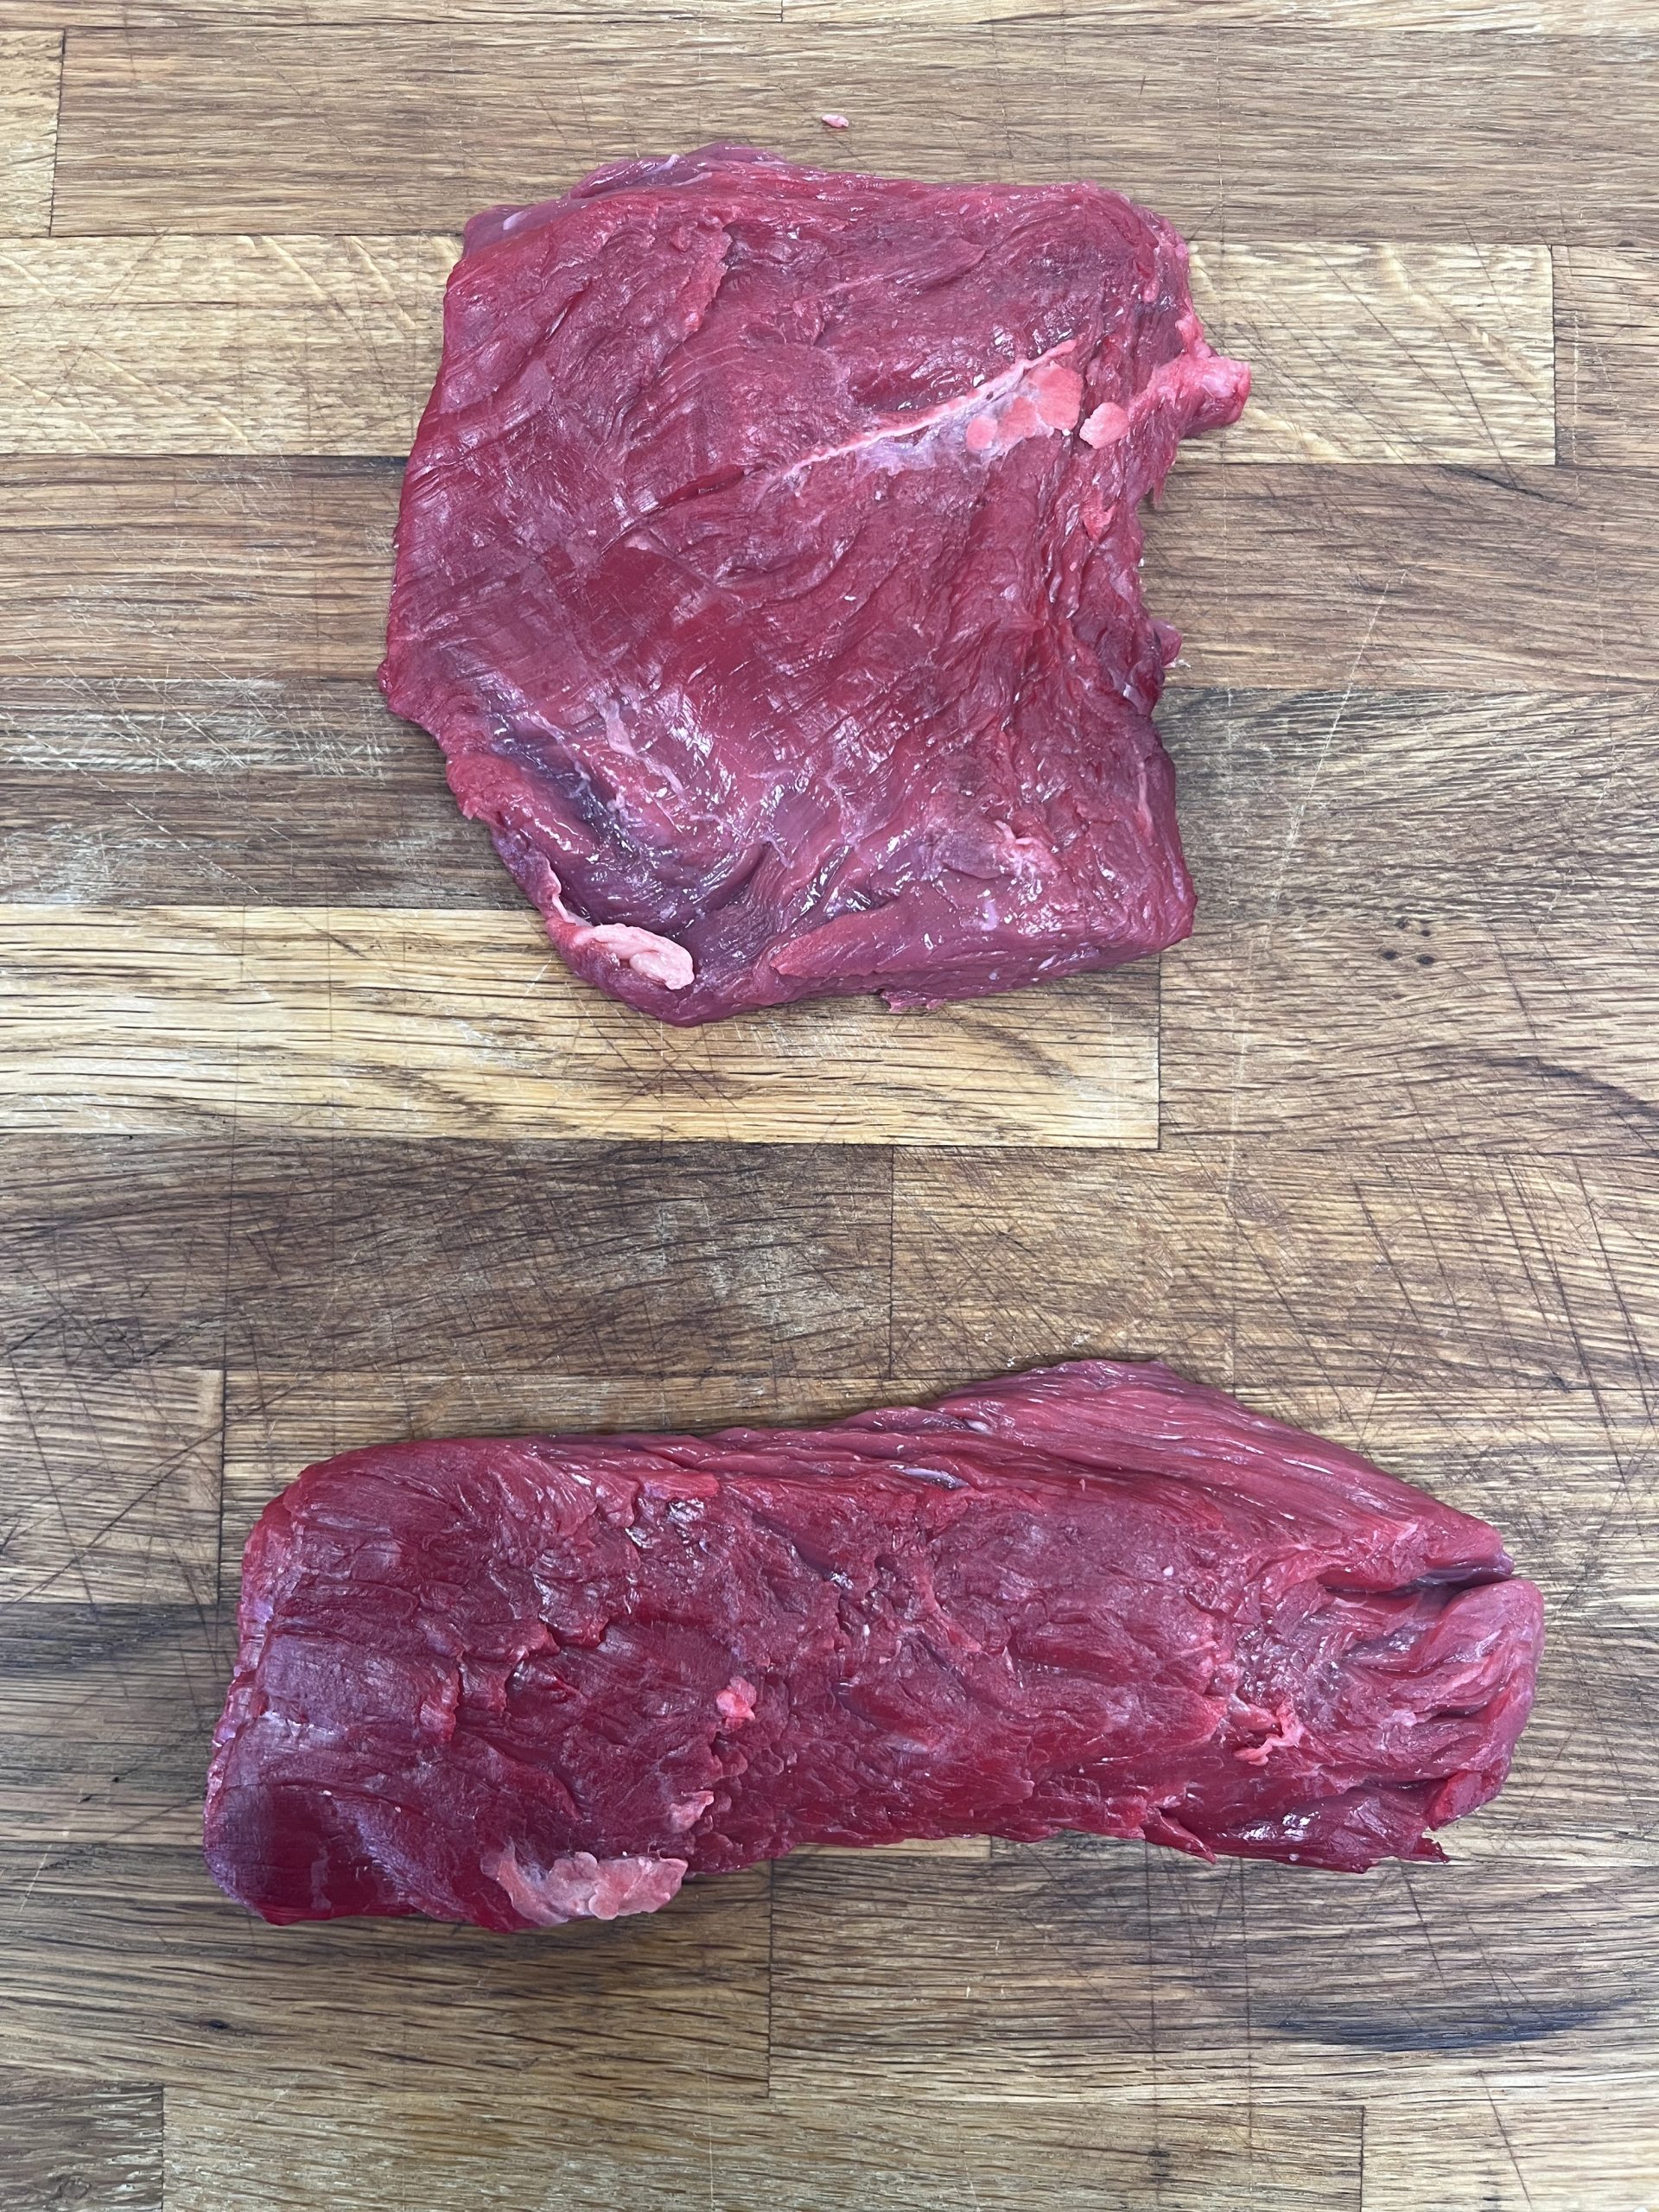 An image of a raw bavette steak